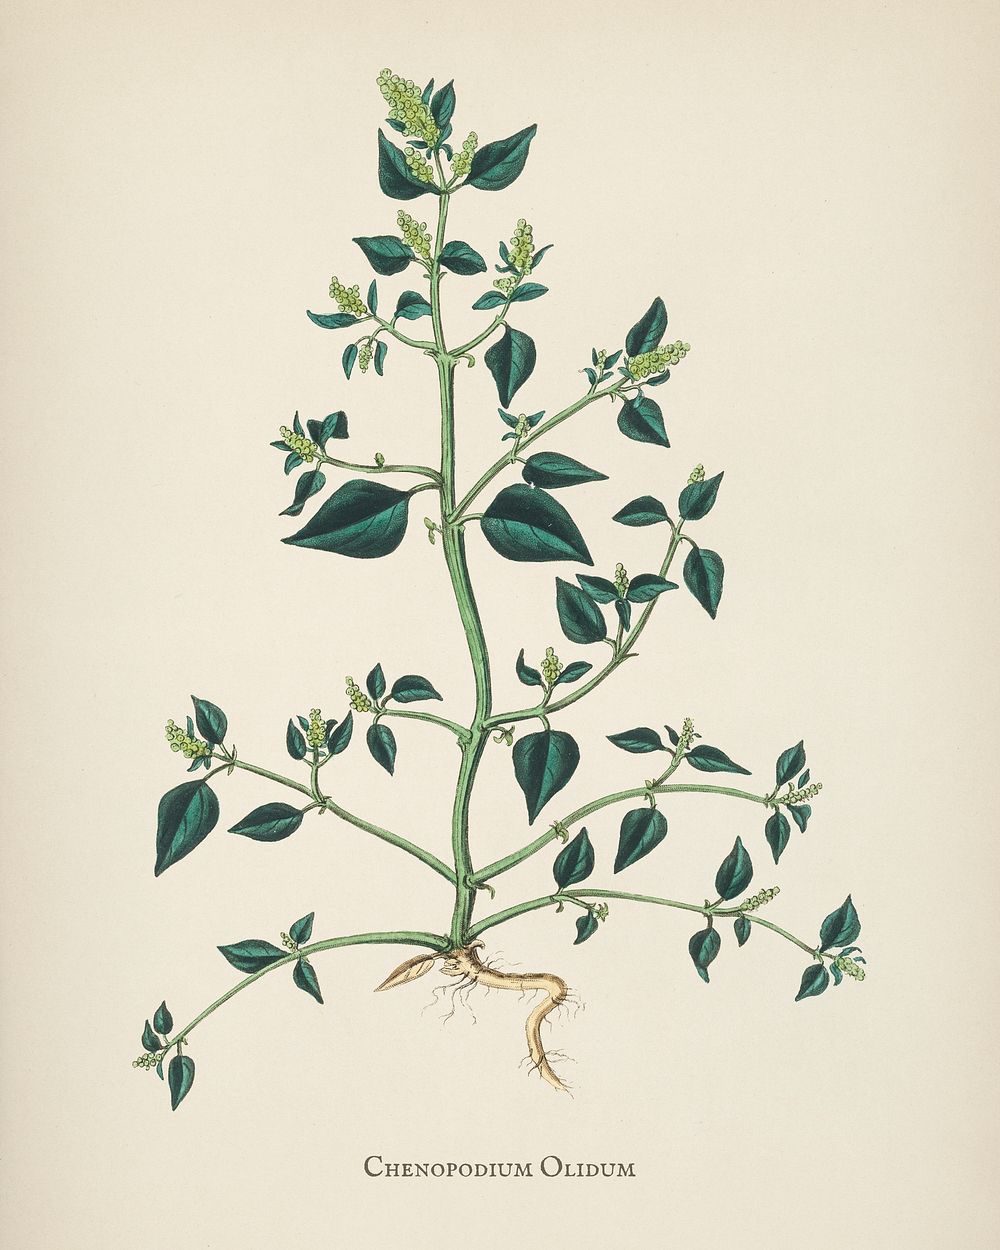 Chenopodium olidum illustration from Medical Botany (1836) by John Stephenson and James Morss Churchill.